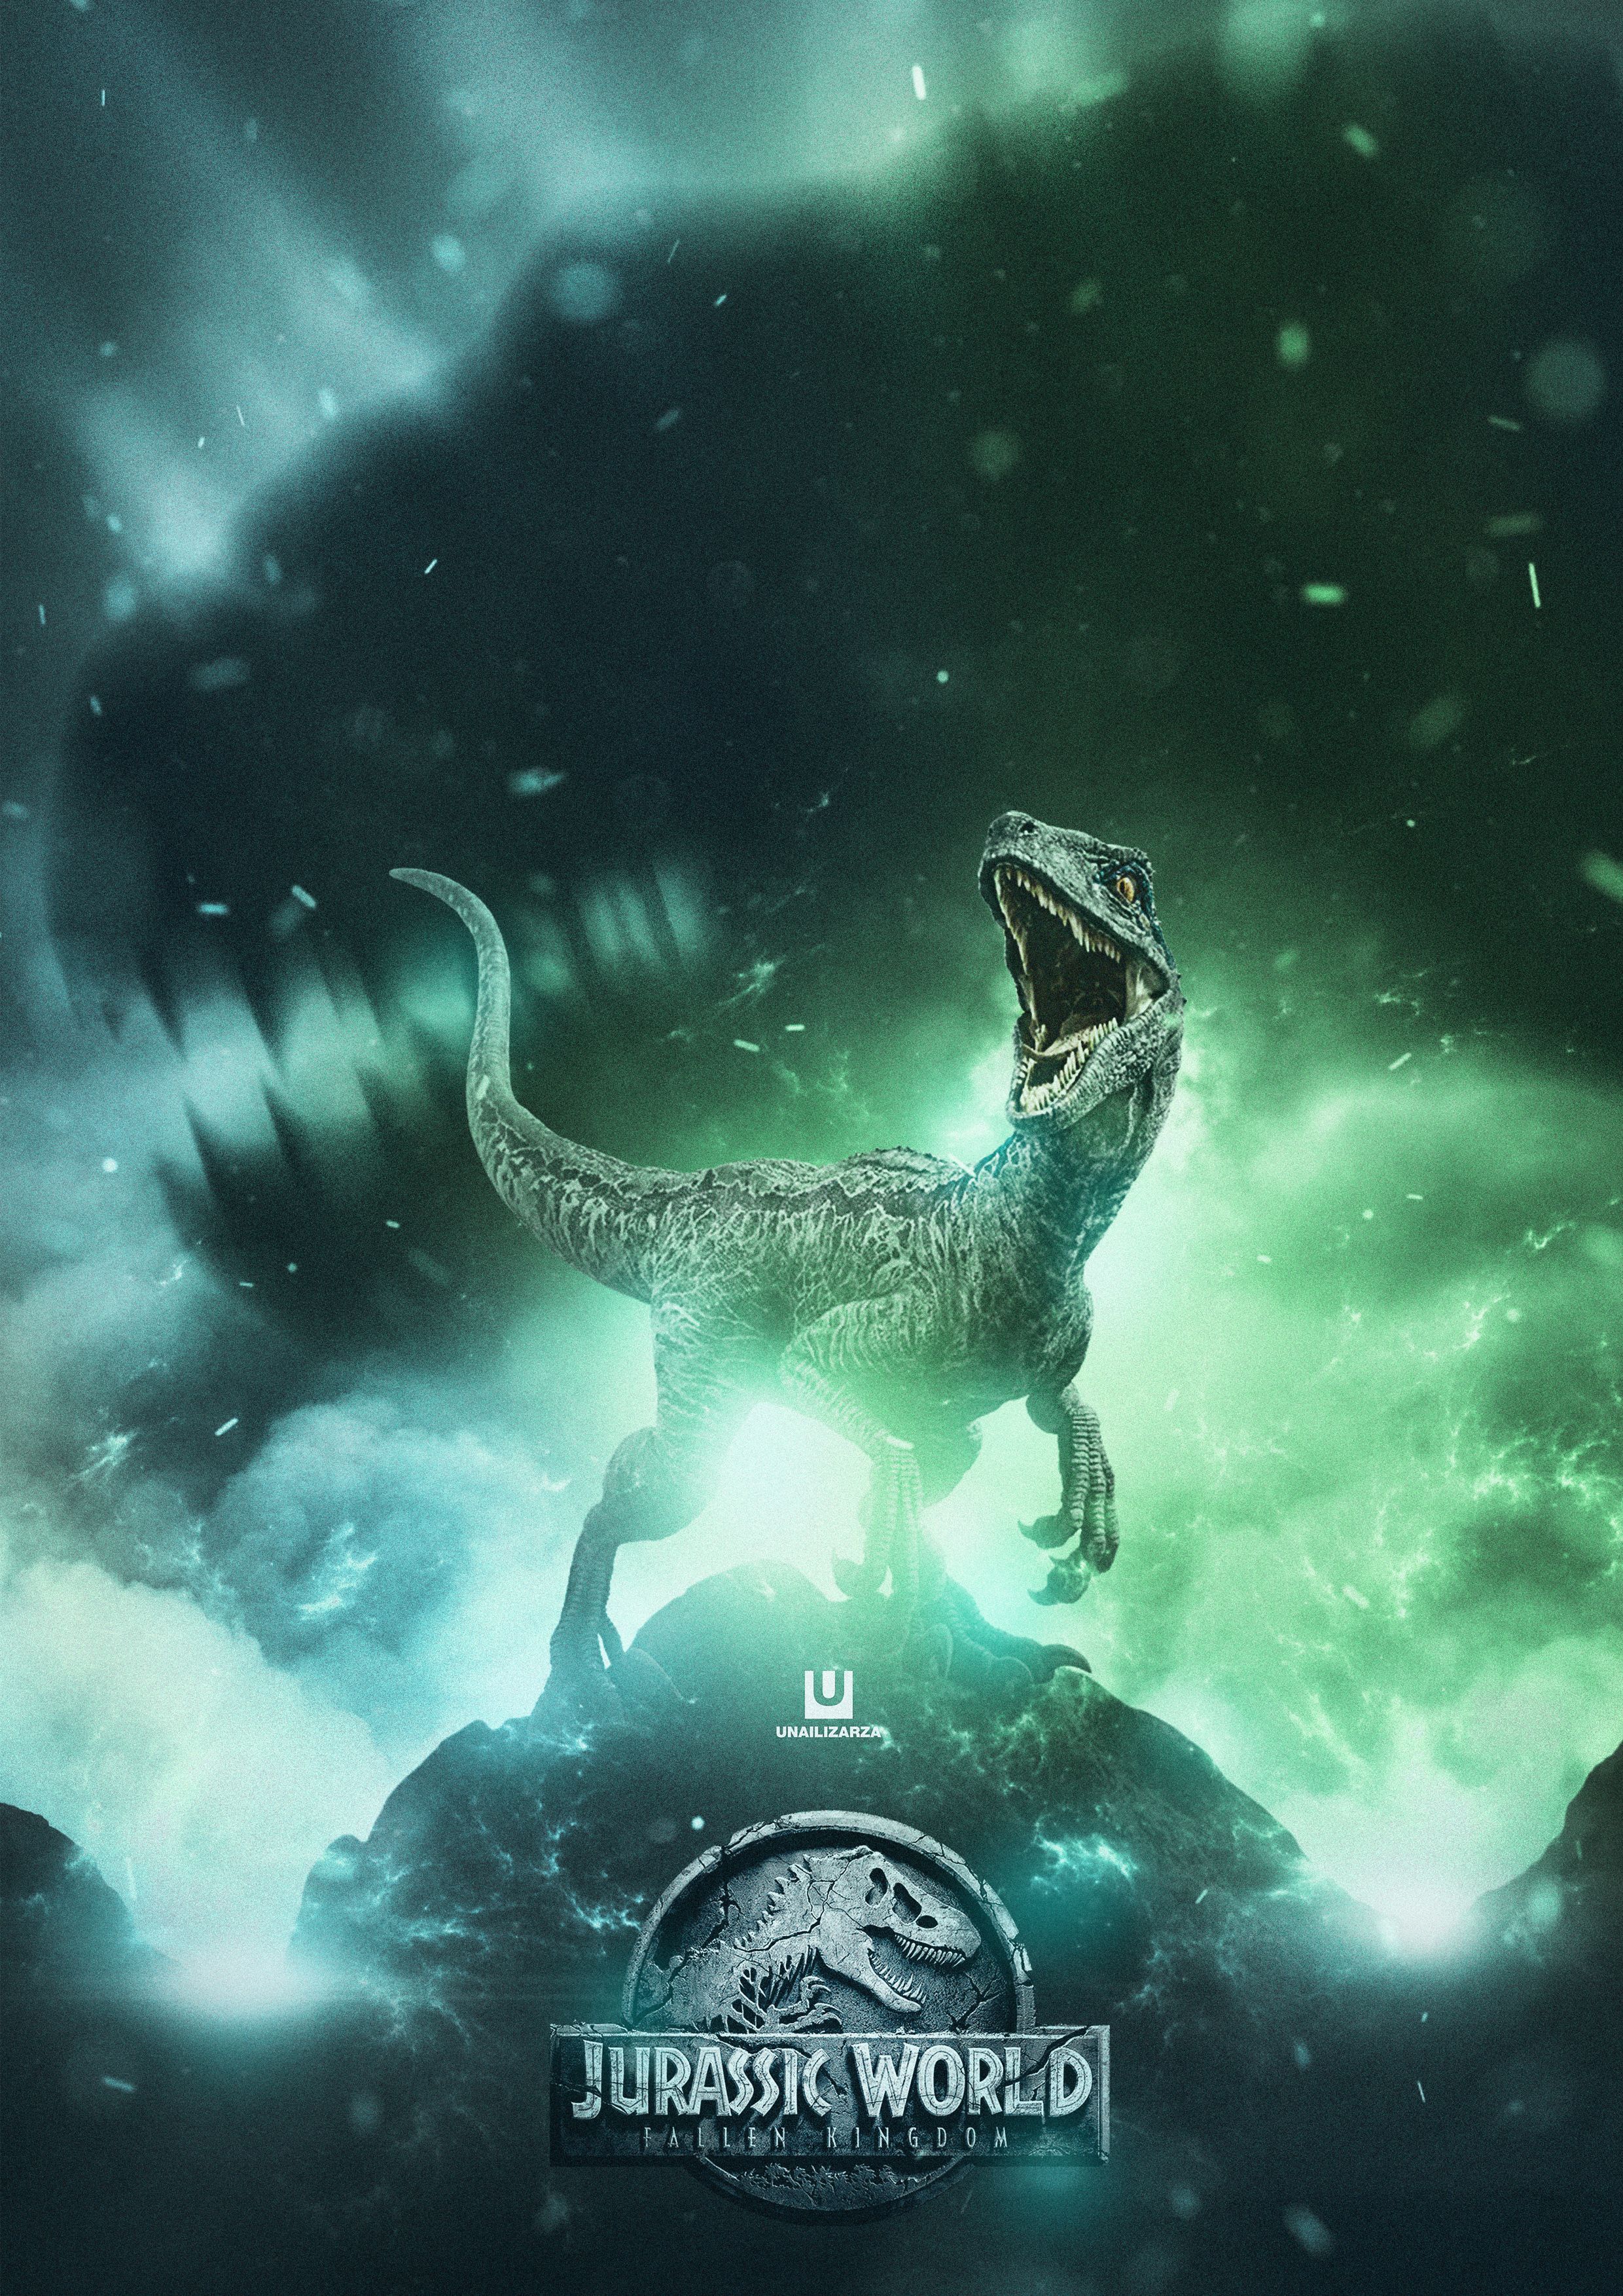 JURASSIC WORLD: BLUE Poster created by Unai Lizarza. Blue jurassic world, Jurassic world wallpaper, Jurassic world poster